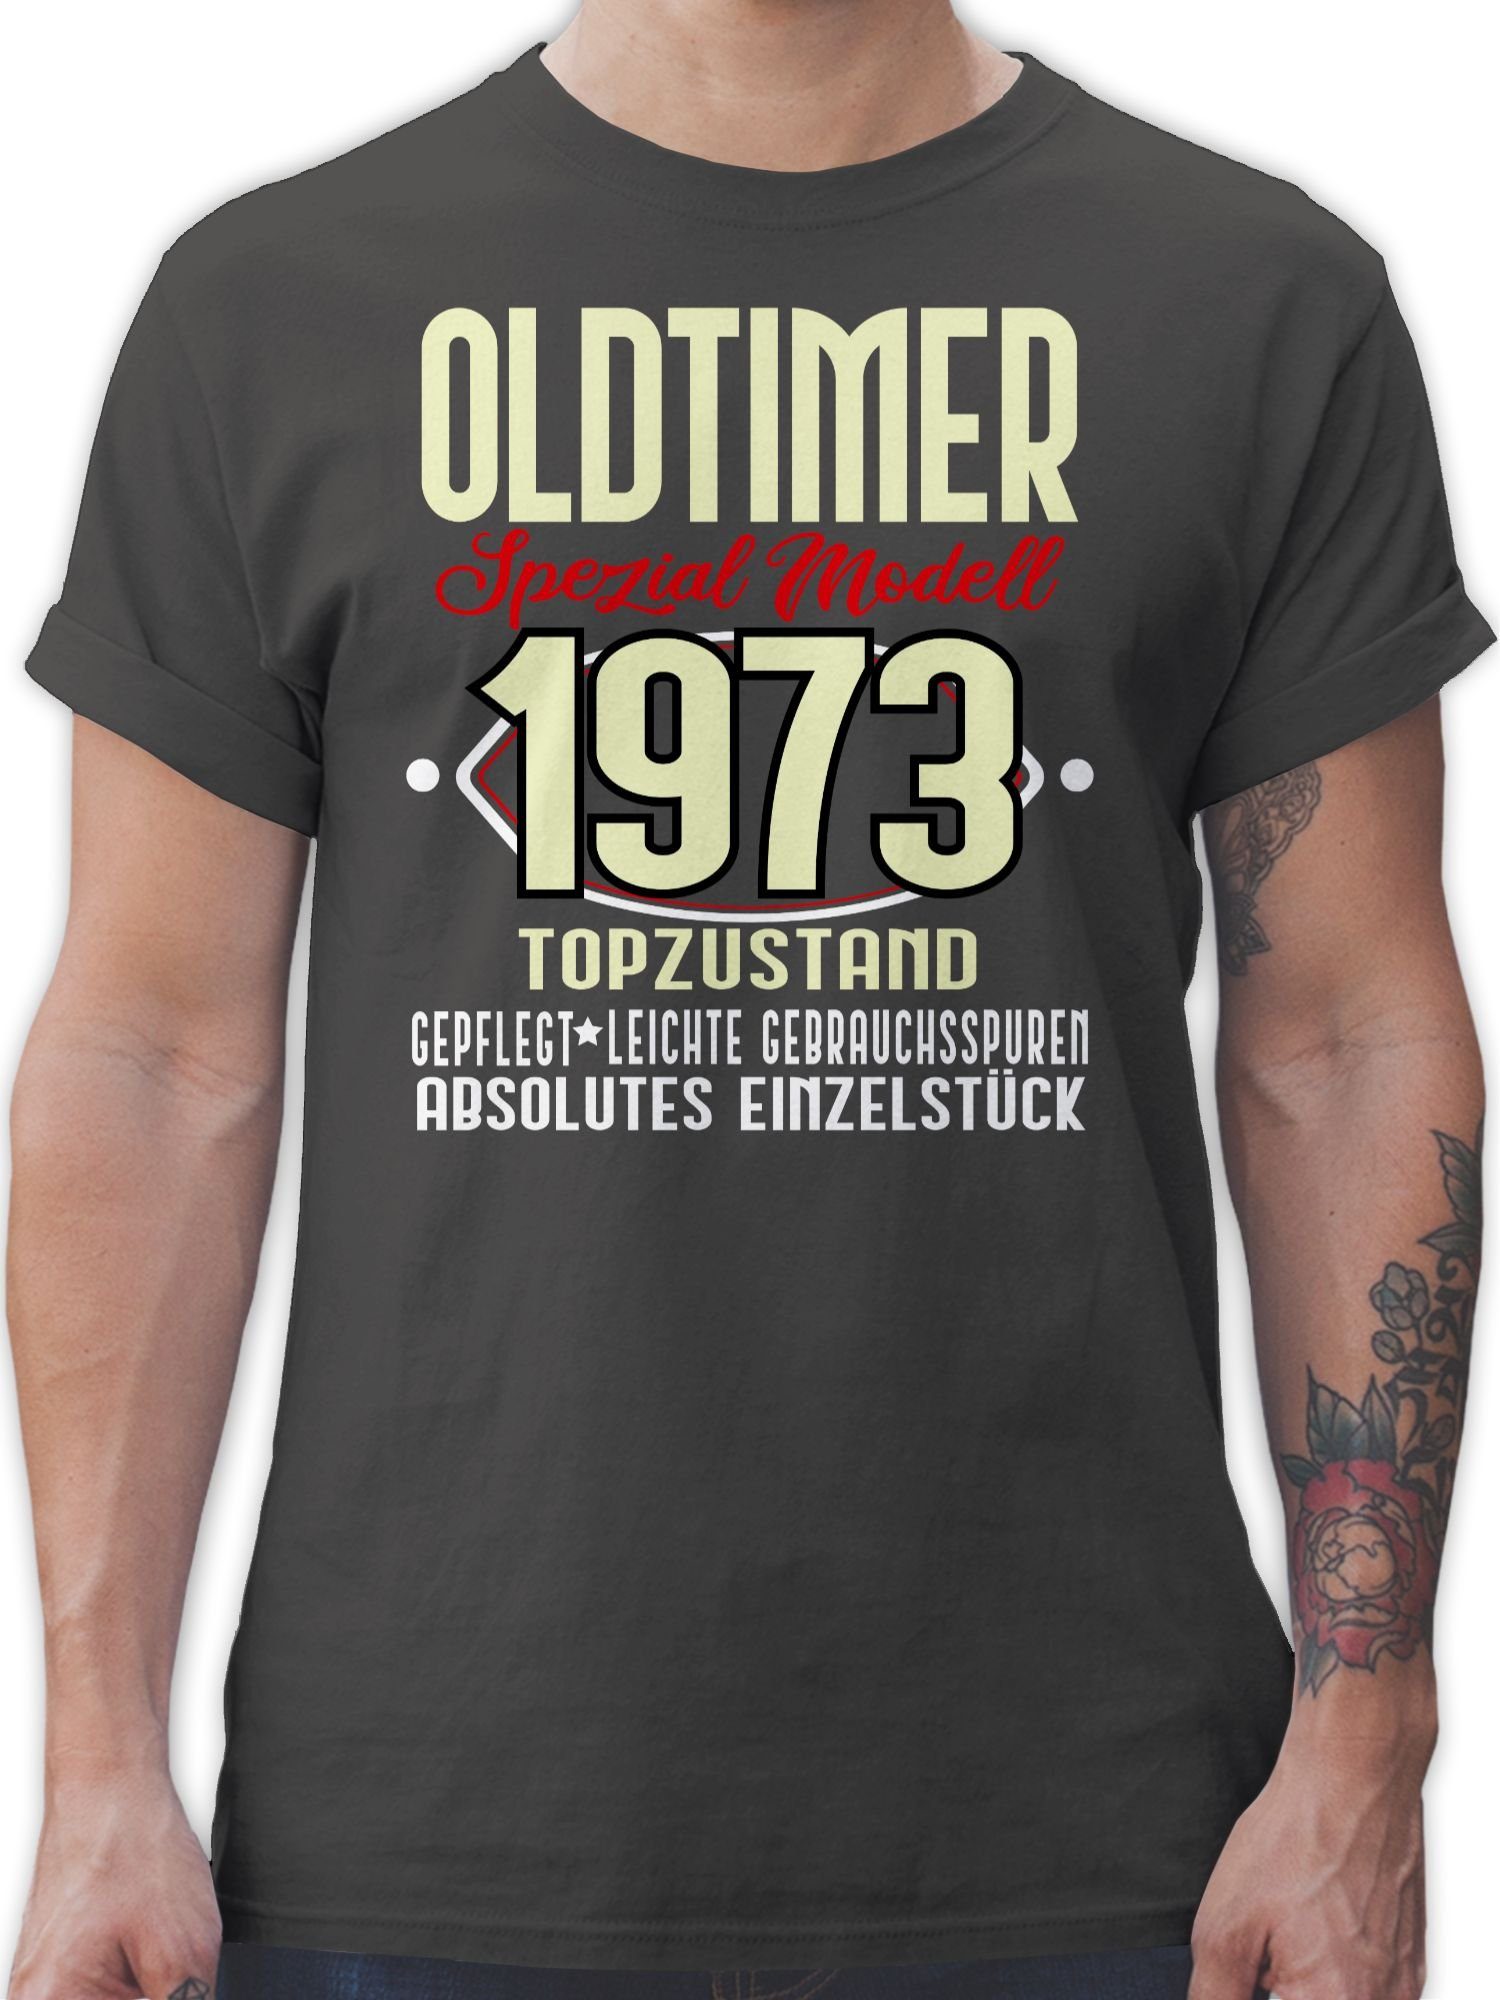 Shirtracer T-Shirt Oldtimer Spezial Modell 1973 Fünfzigster 50. Geburtstag 03 Dunkelgrau